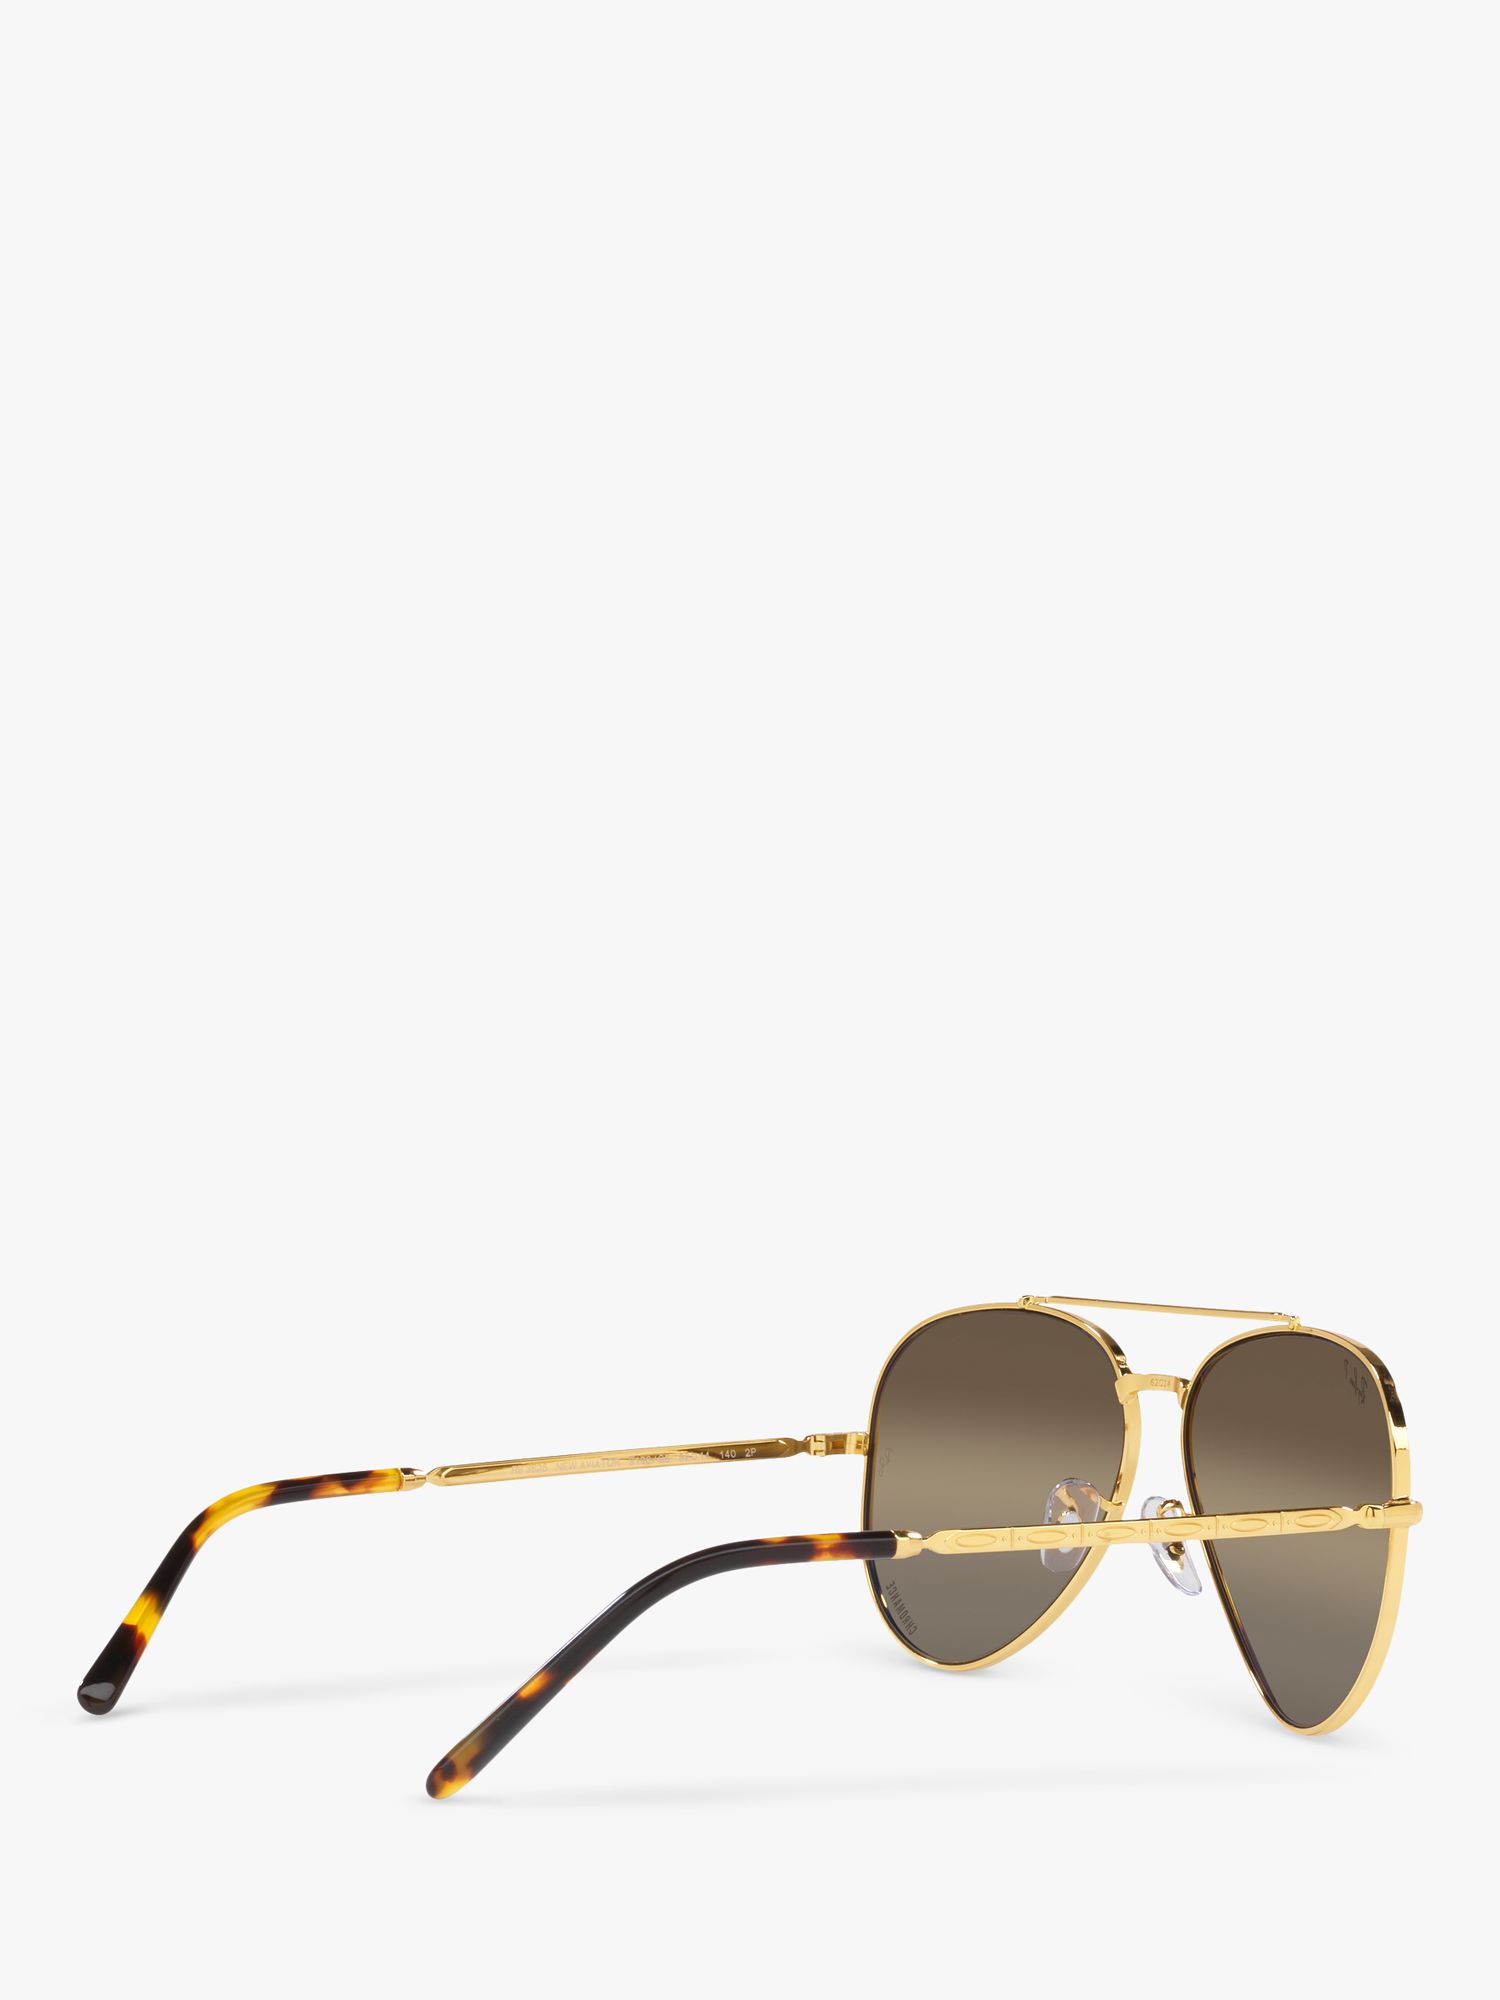 Ray-Ban RB3625 Unisex Polarised Aviator Sunglasses, Legend Gold/Brown